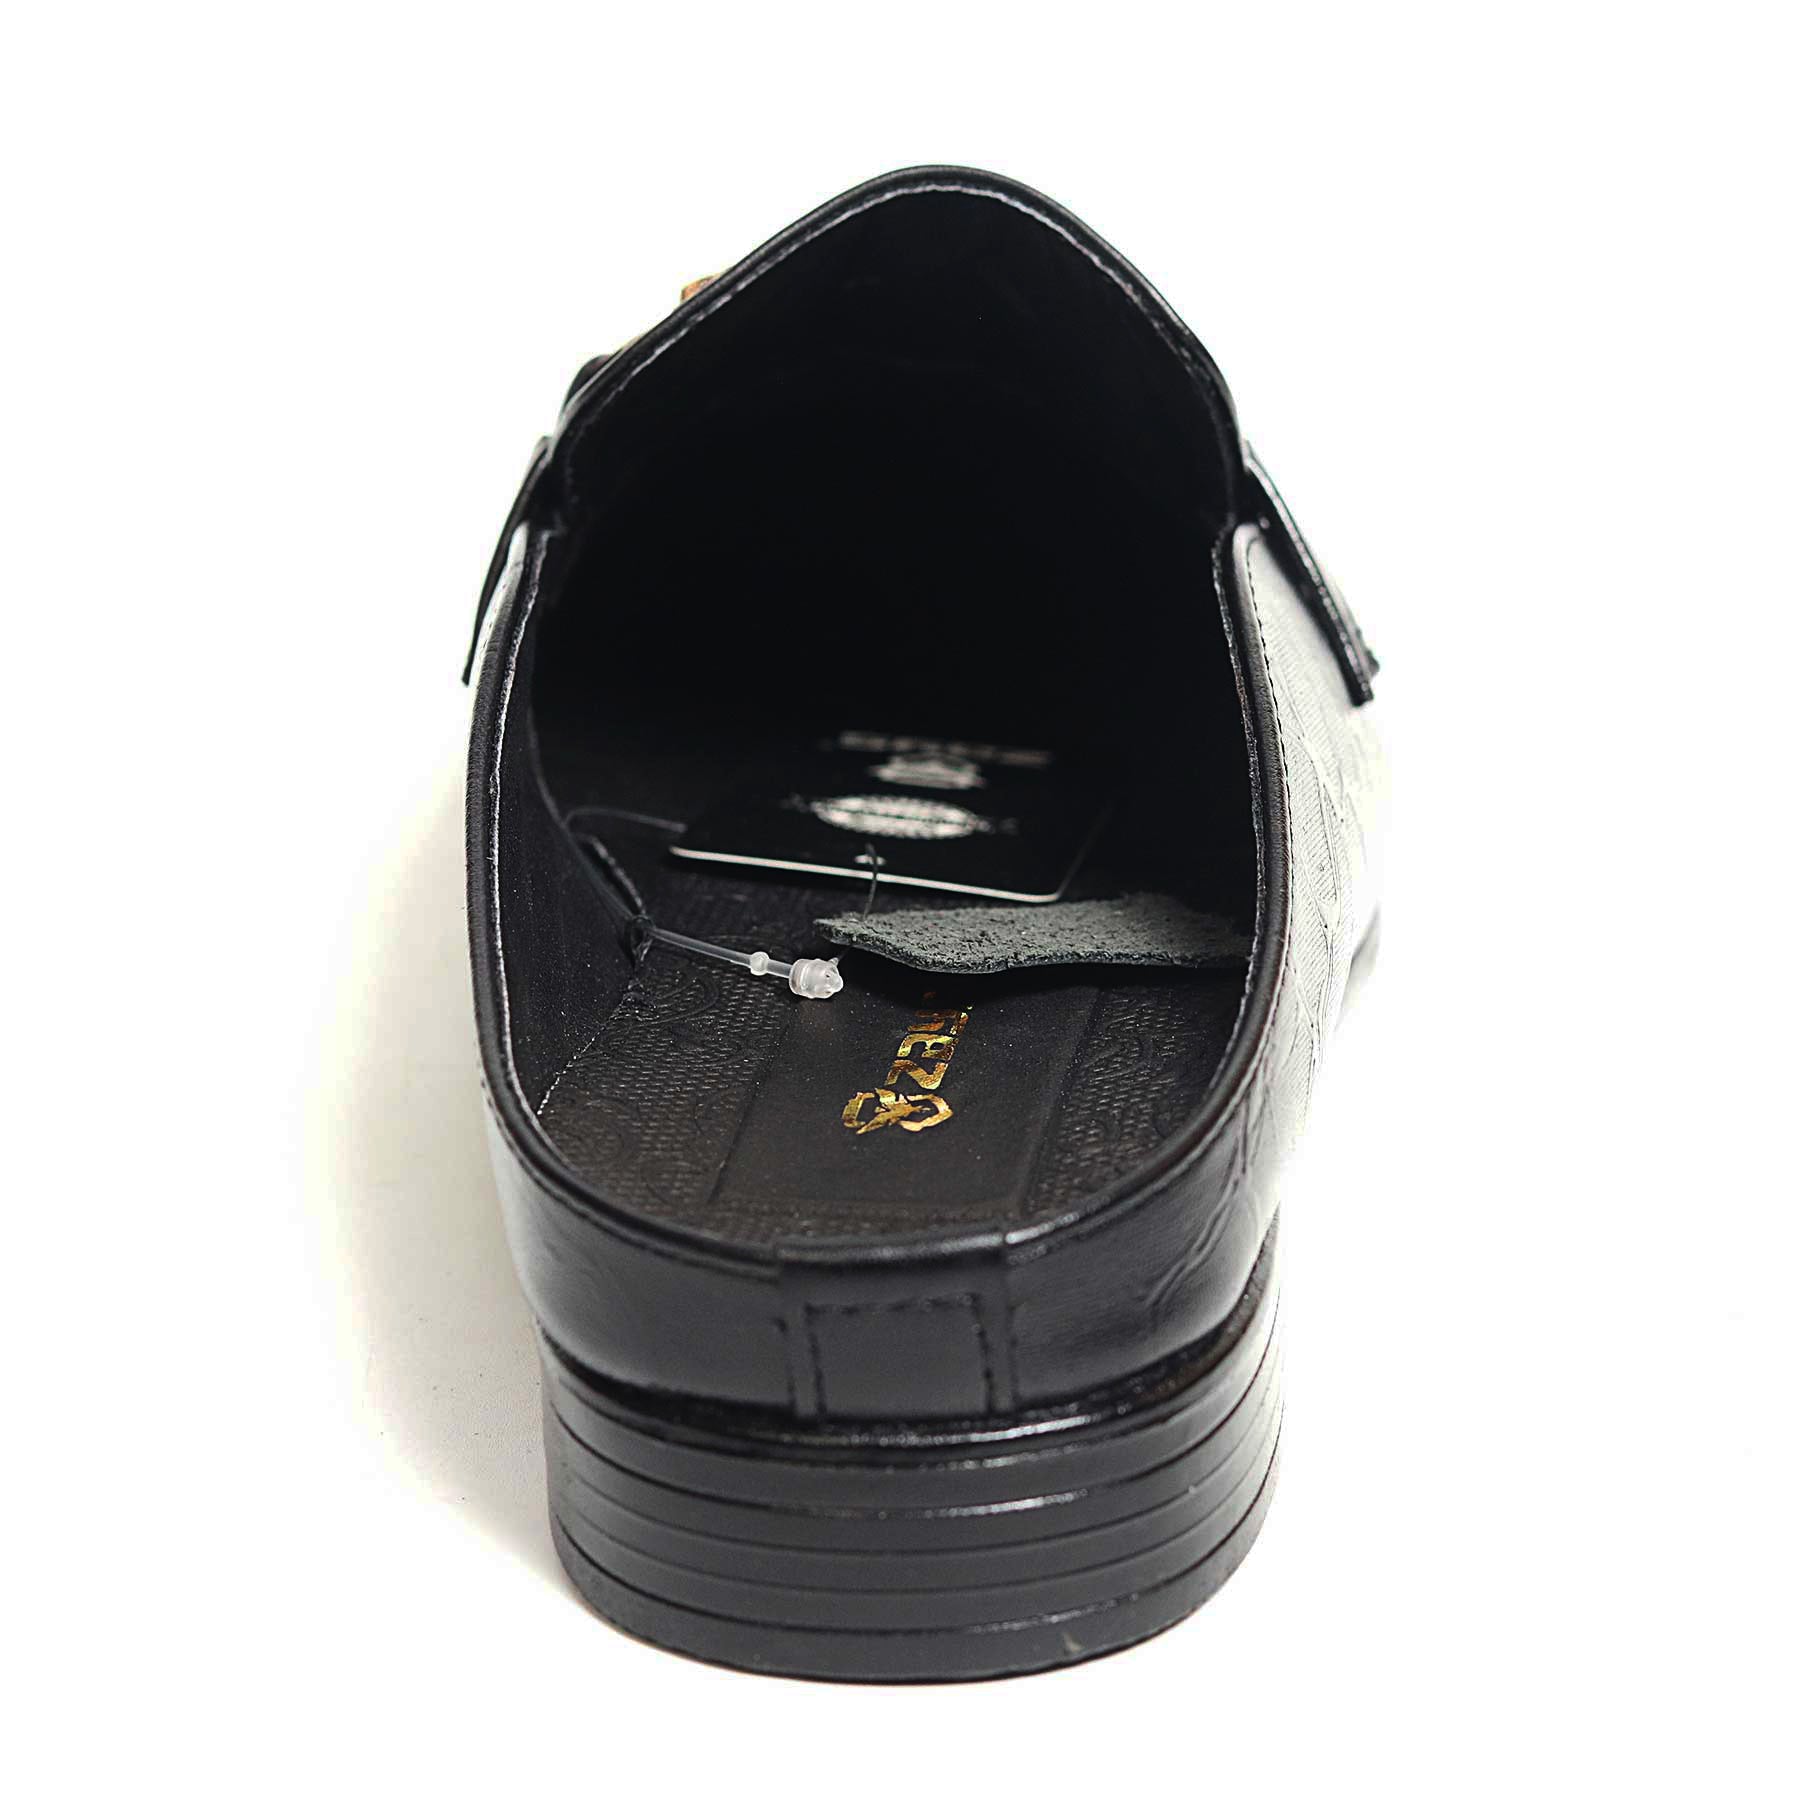 Zays Leather Premium Half Shoe For Men (Black) - SF86